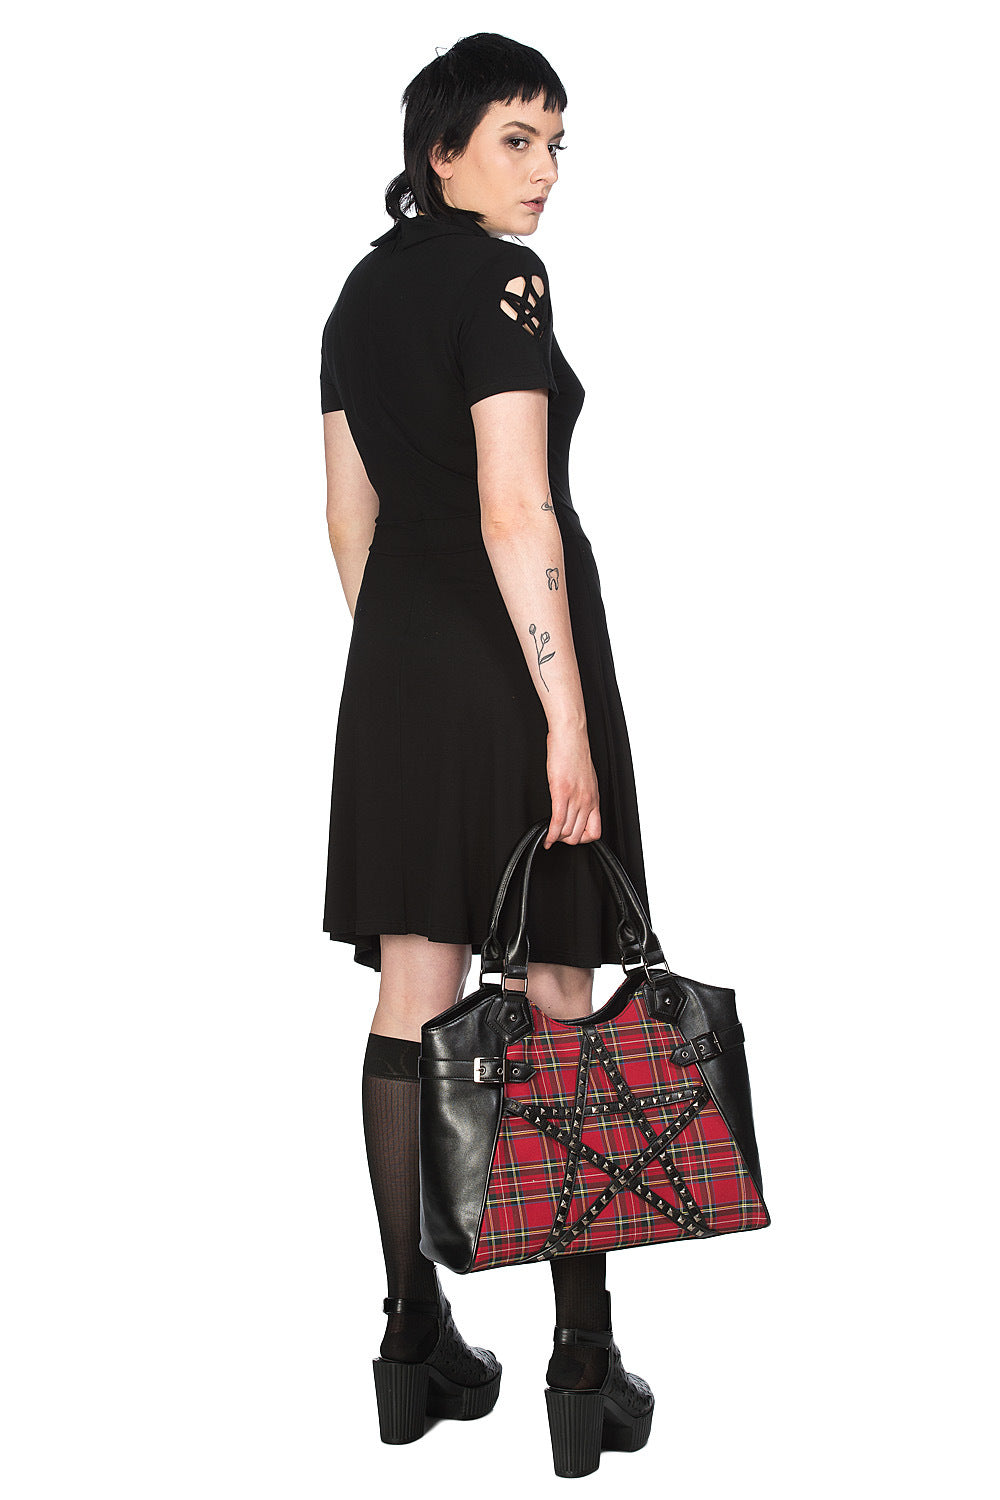 Alternative model in black dress holding red tartan hand bag with studded pentagram